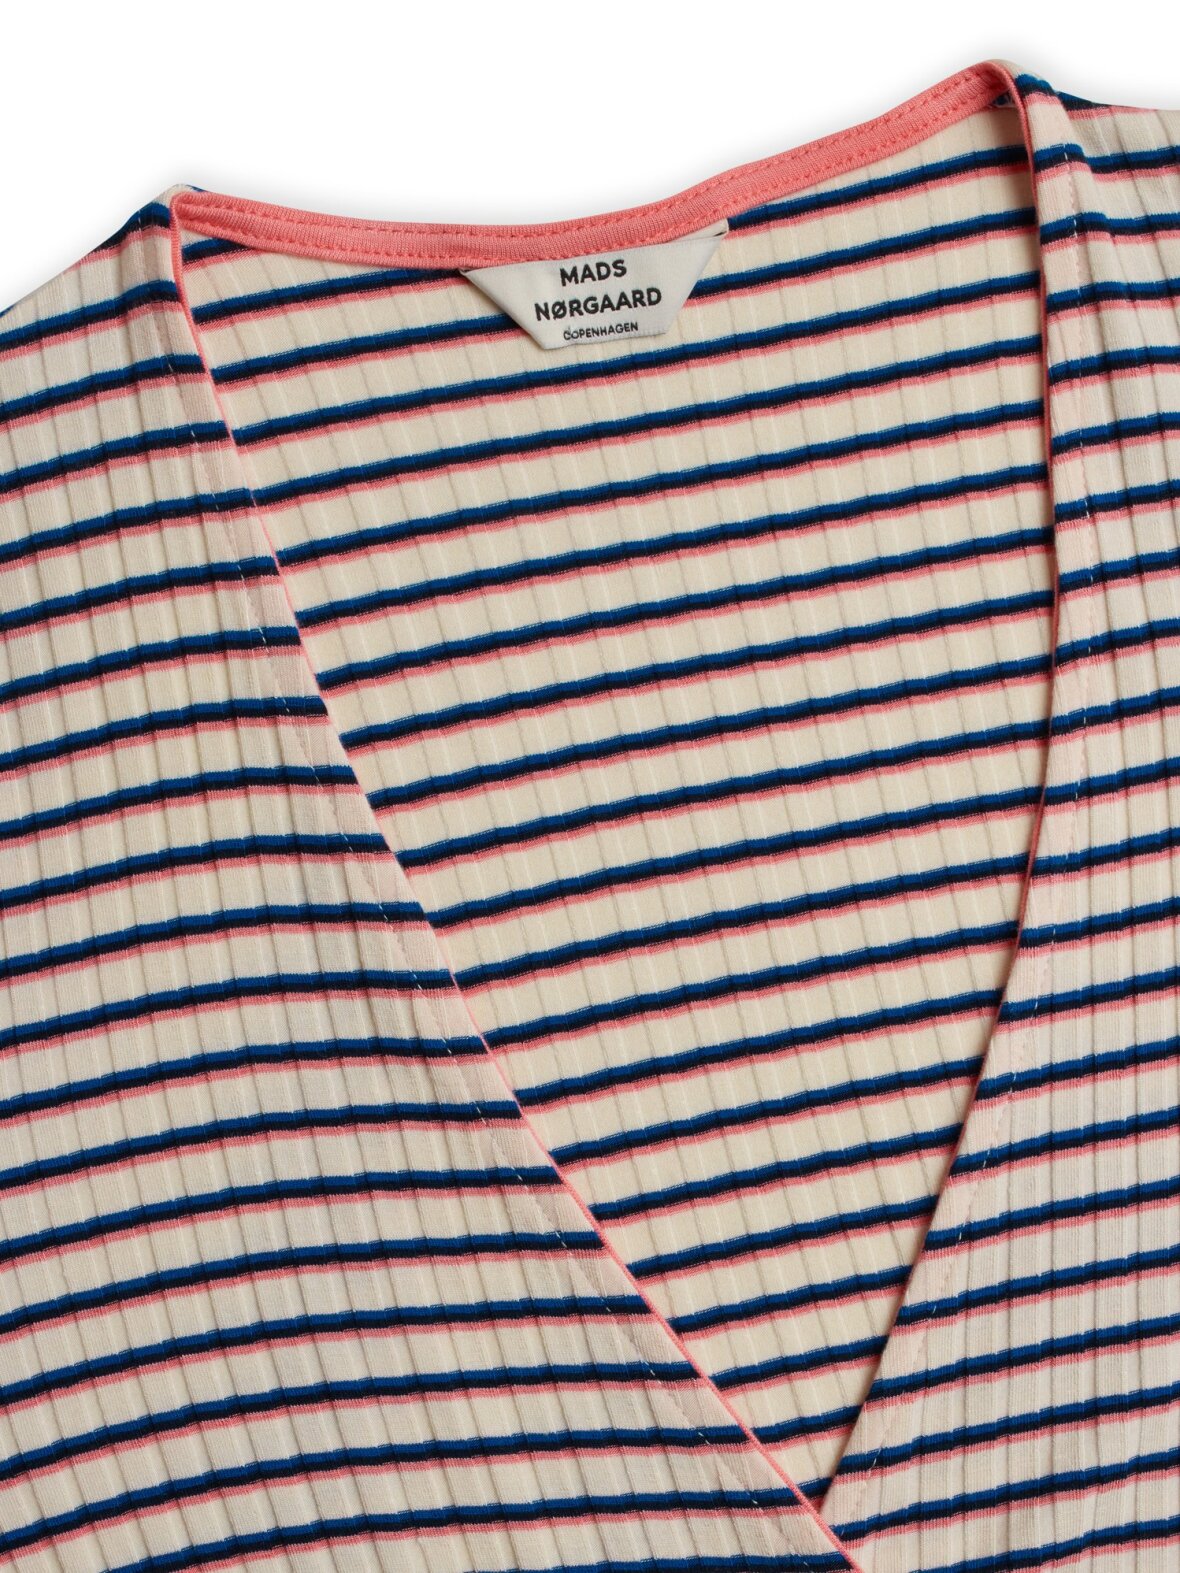 Ithaca praktisk Nathaniel Ward Enula9 - UDSALG - Mads Nørgaard - 5x5 stripe billie wrap bluse